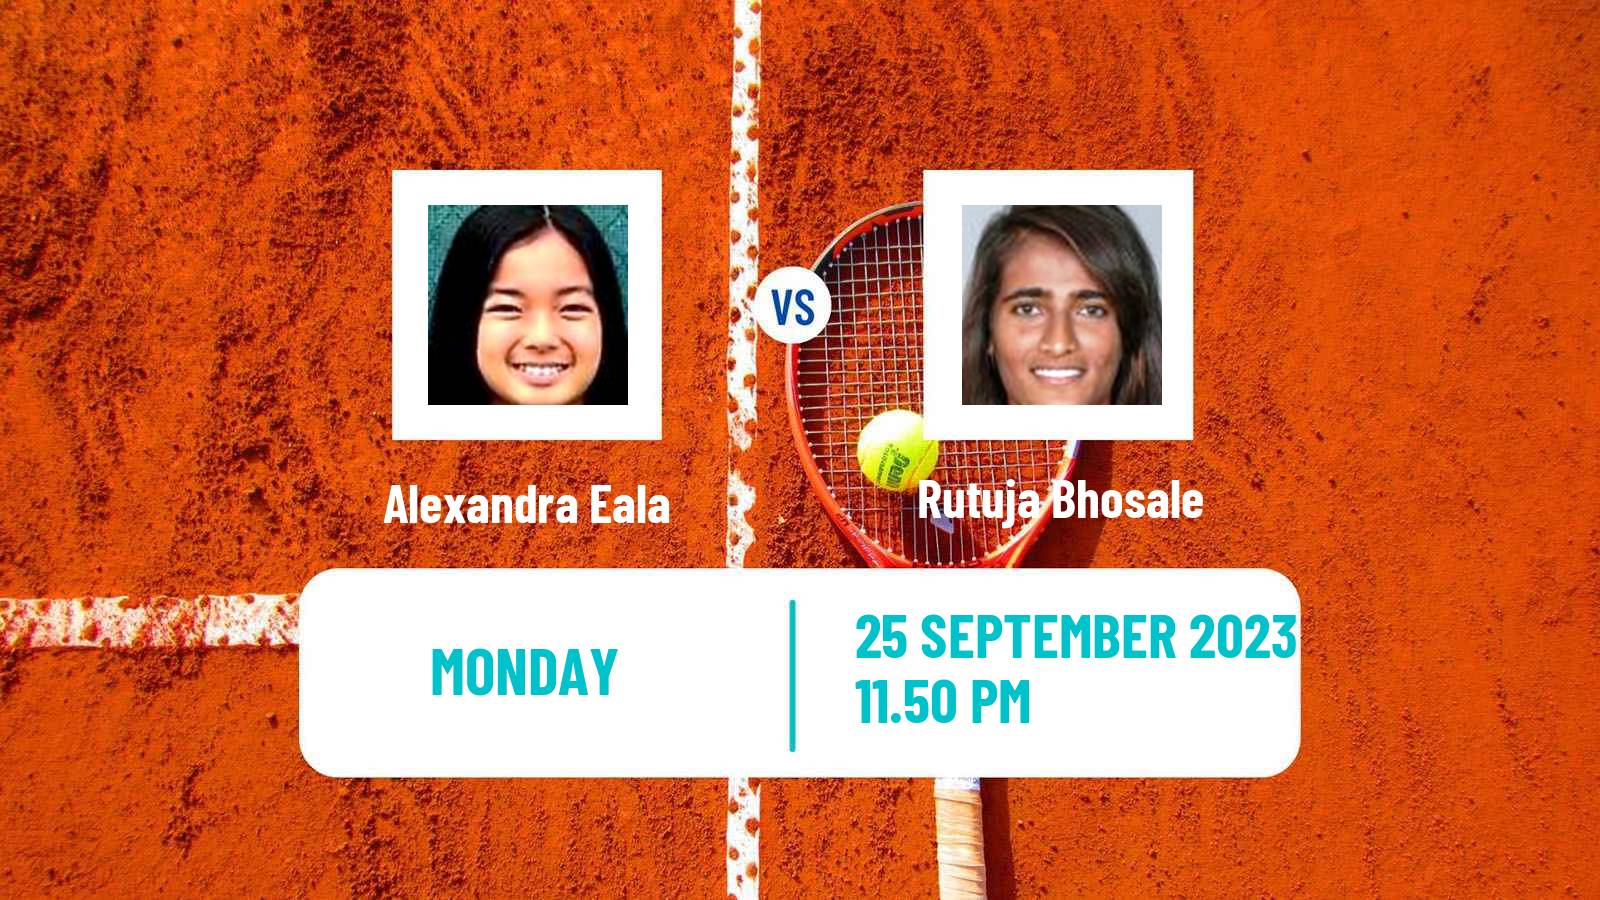 Tennis WTA Asian Games Alexandra Eala - Rutuja Bhosale